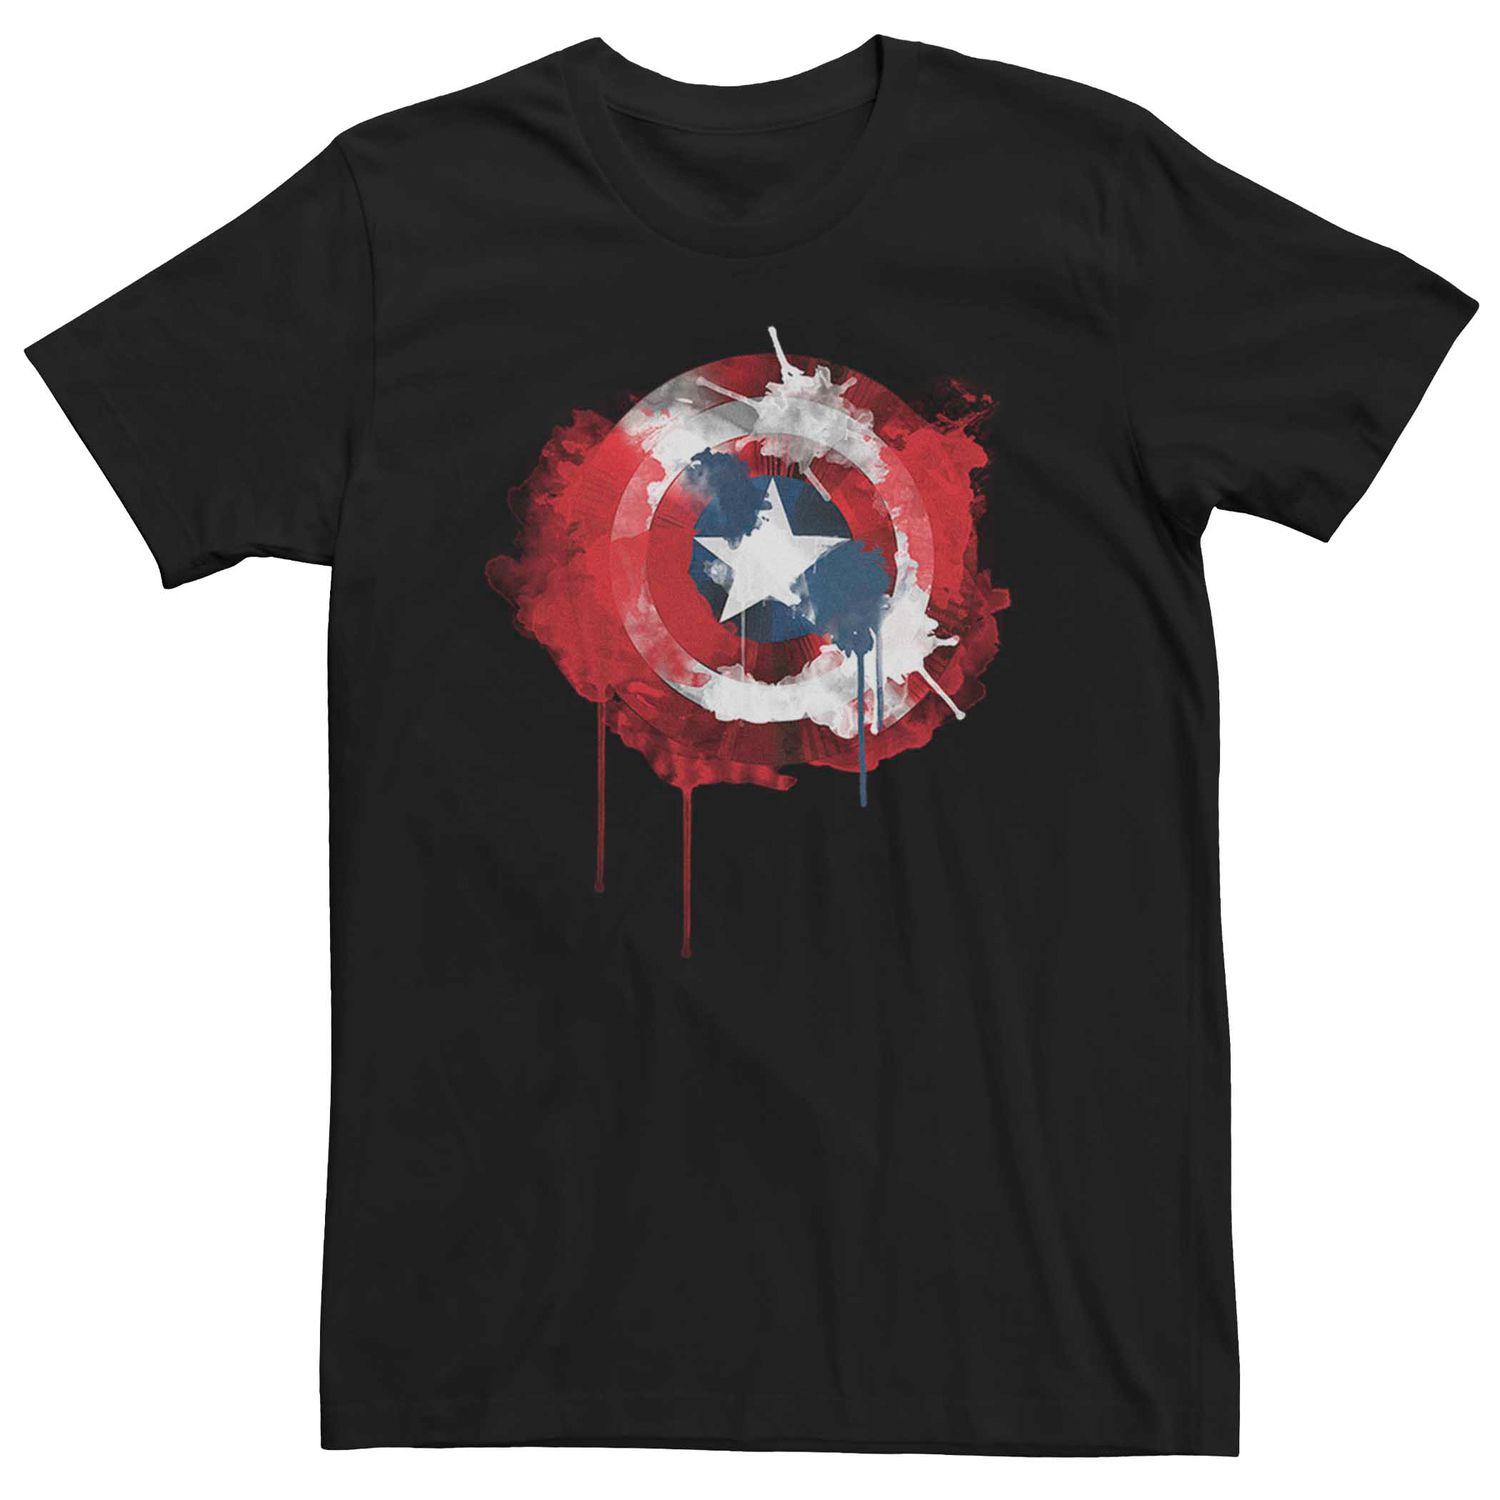 Мужская футболка с рисунком Капитана Америки Marvel с щитком и щитком Licensed Character